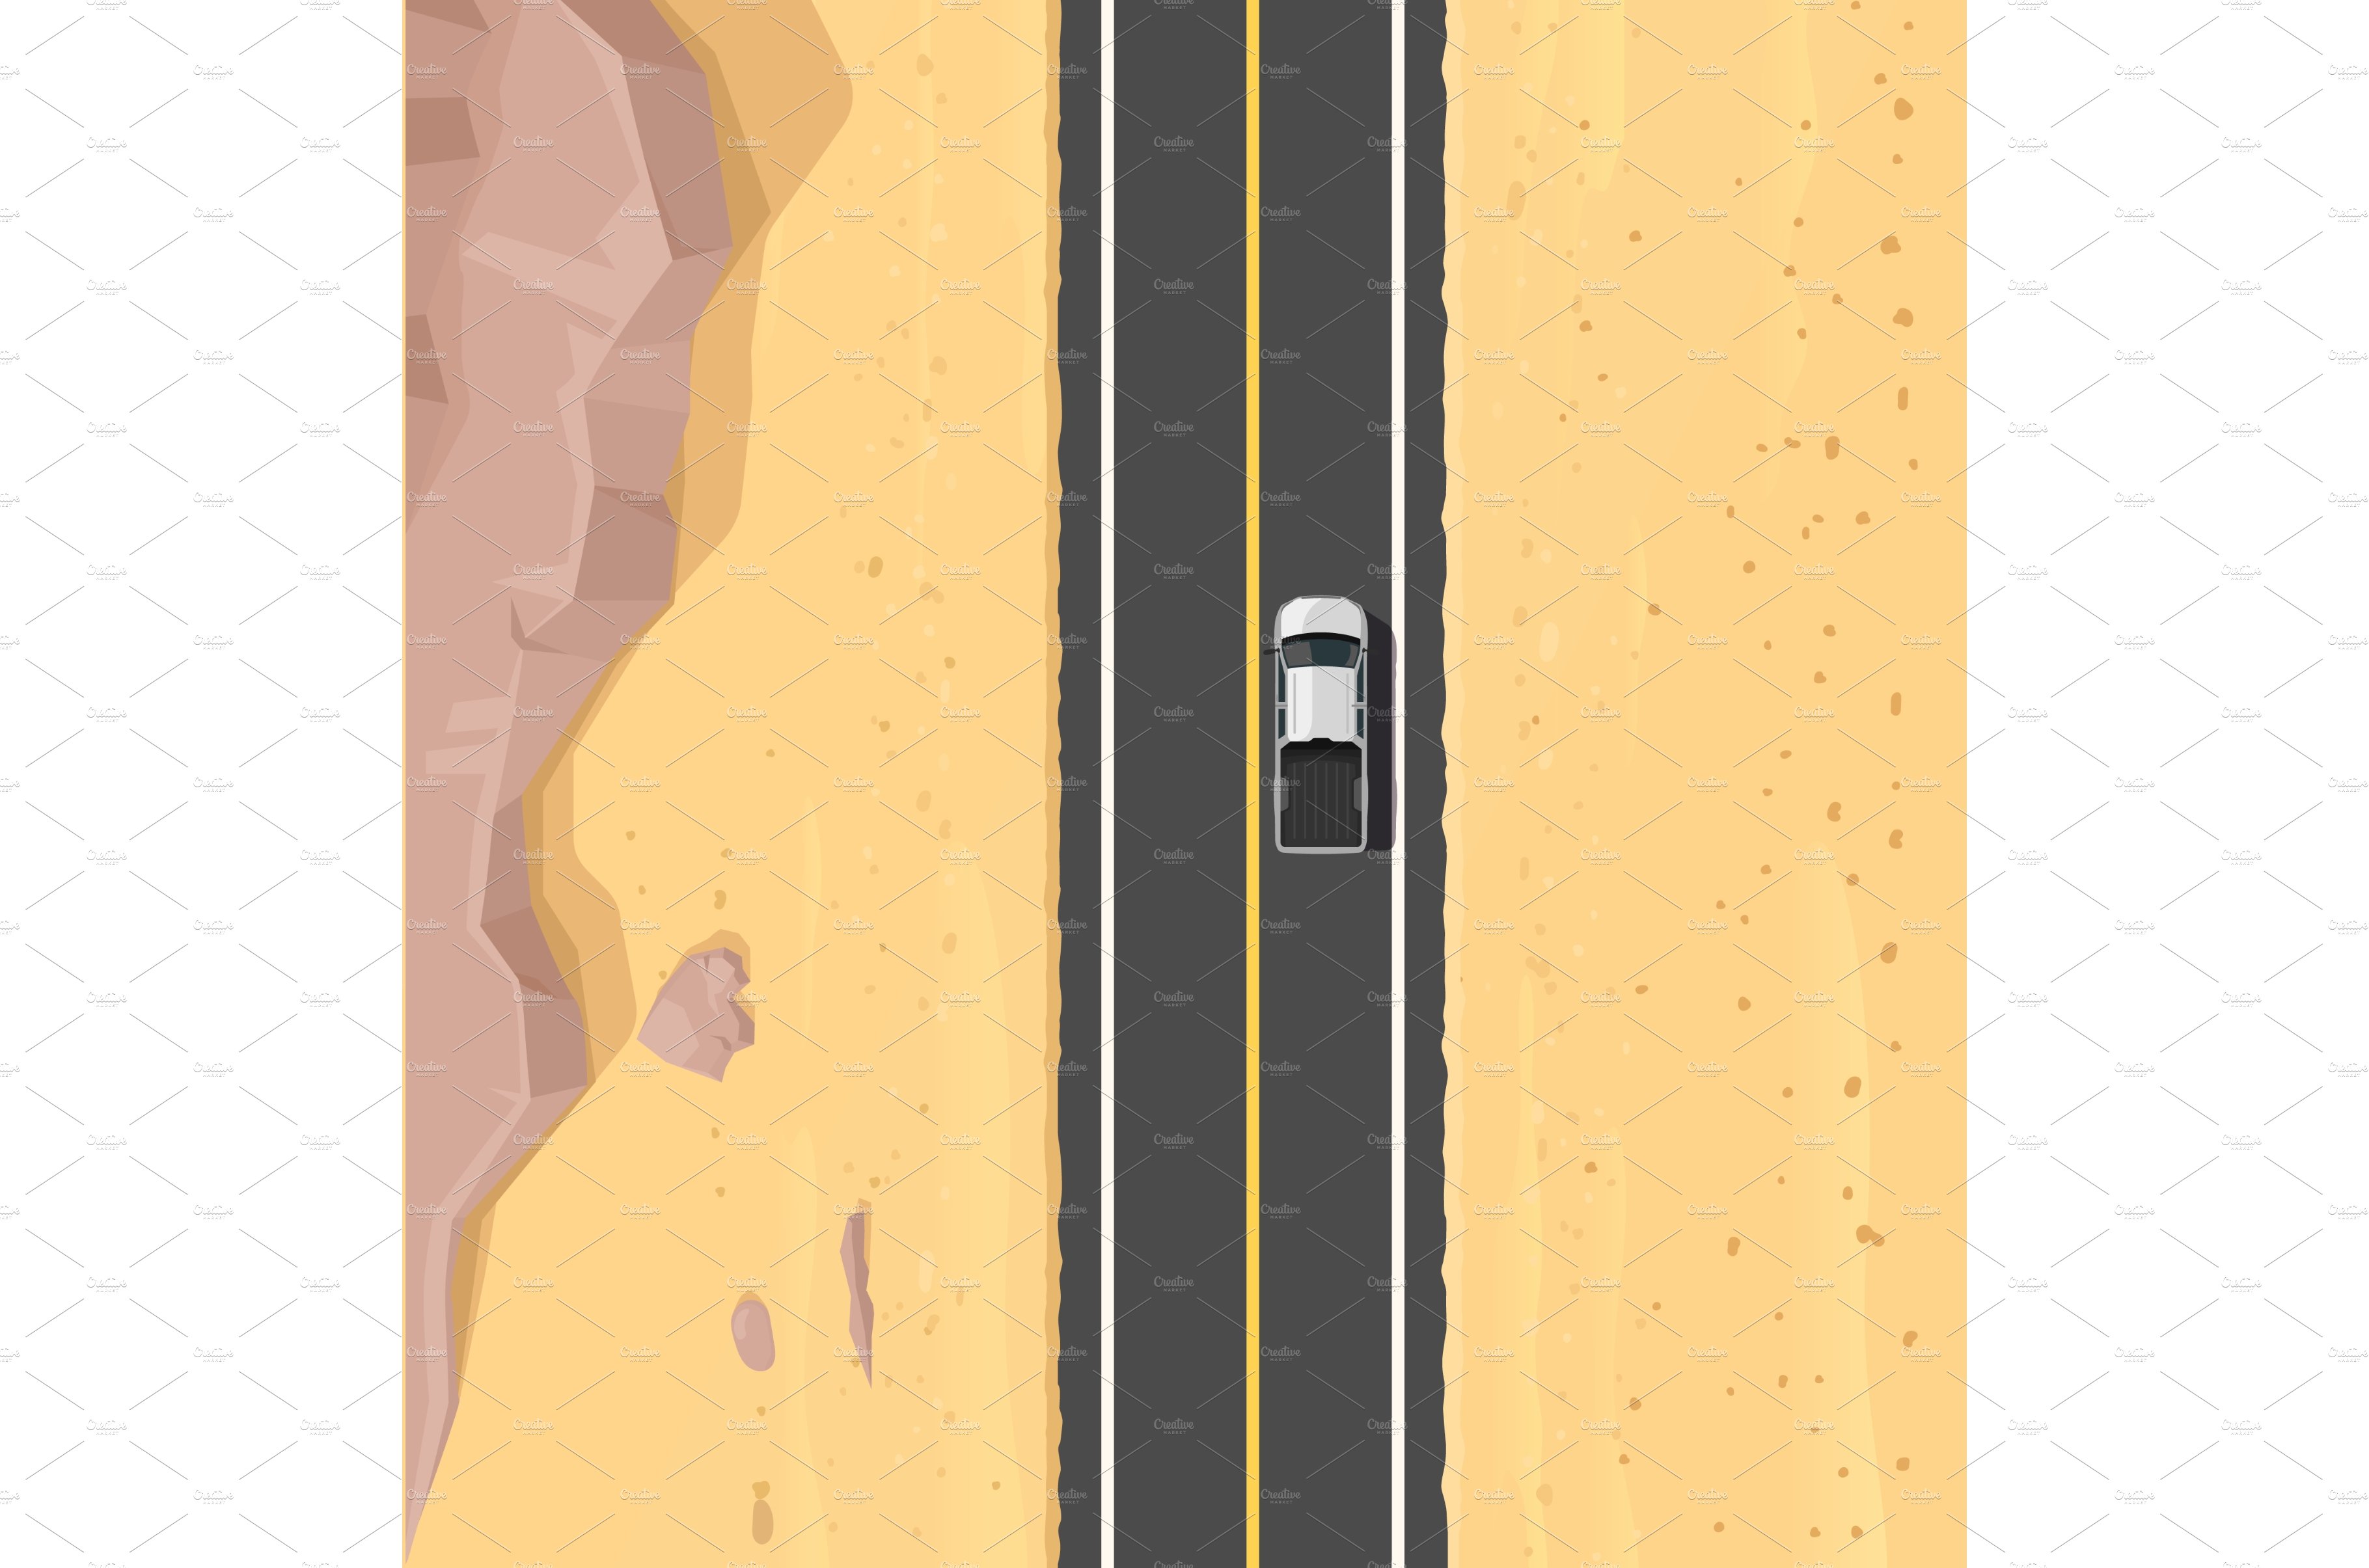 Desert road top view landscape cover image.